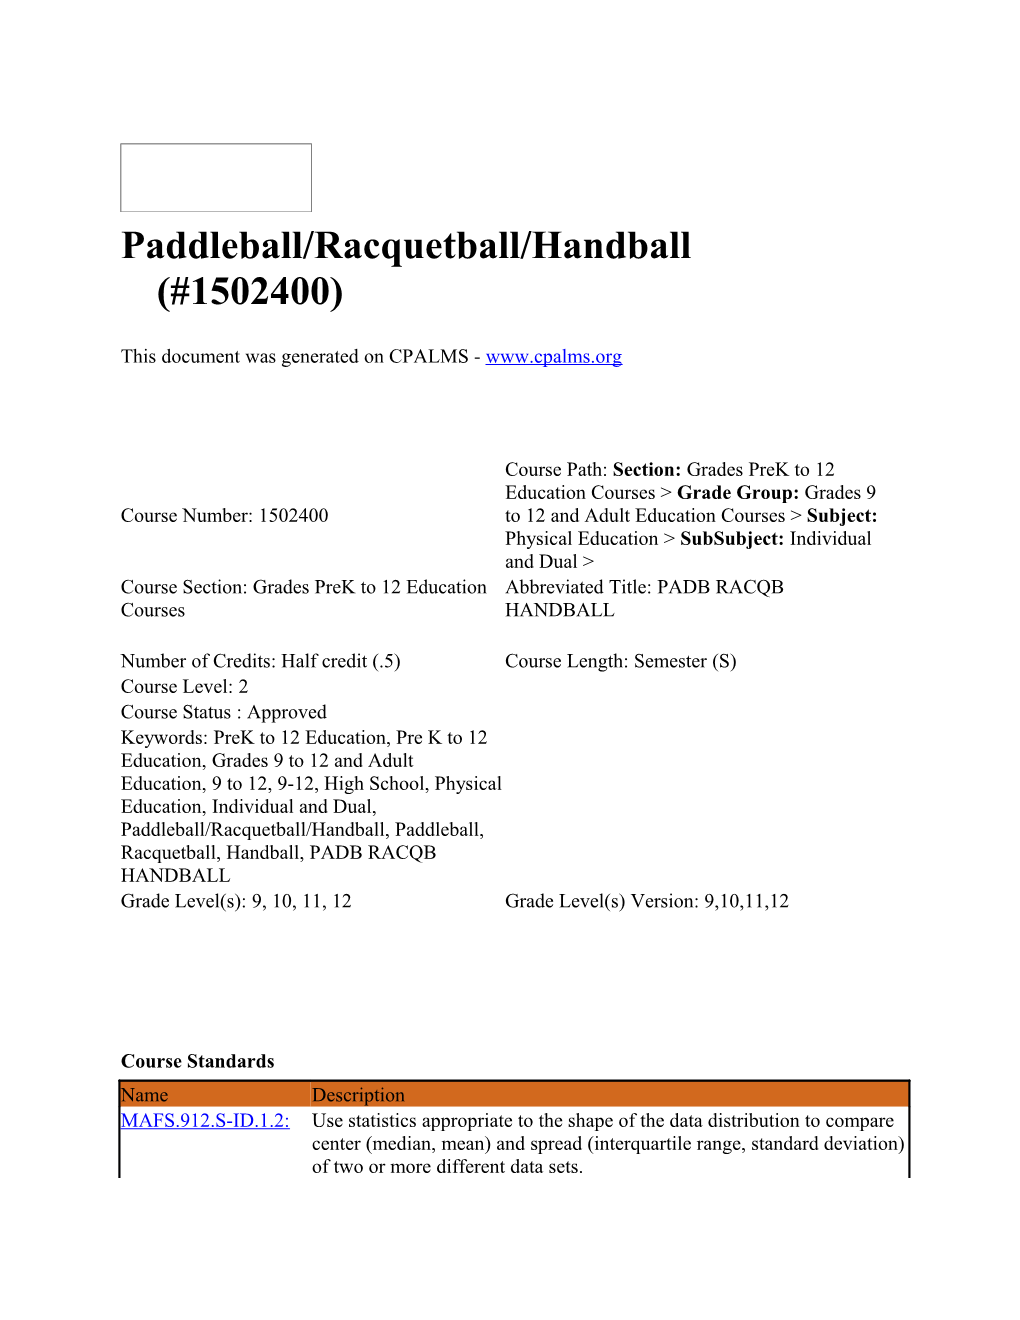 Paddleball/Racquetball/Handball (#1502400)